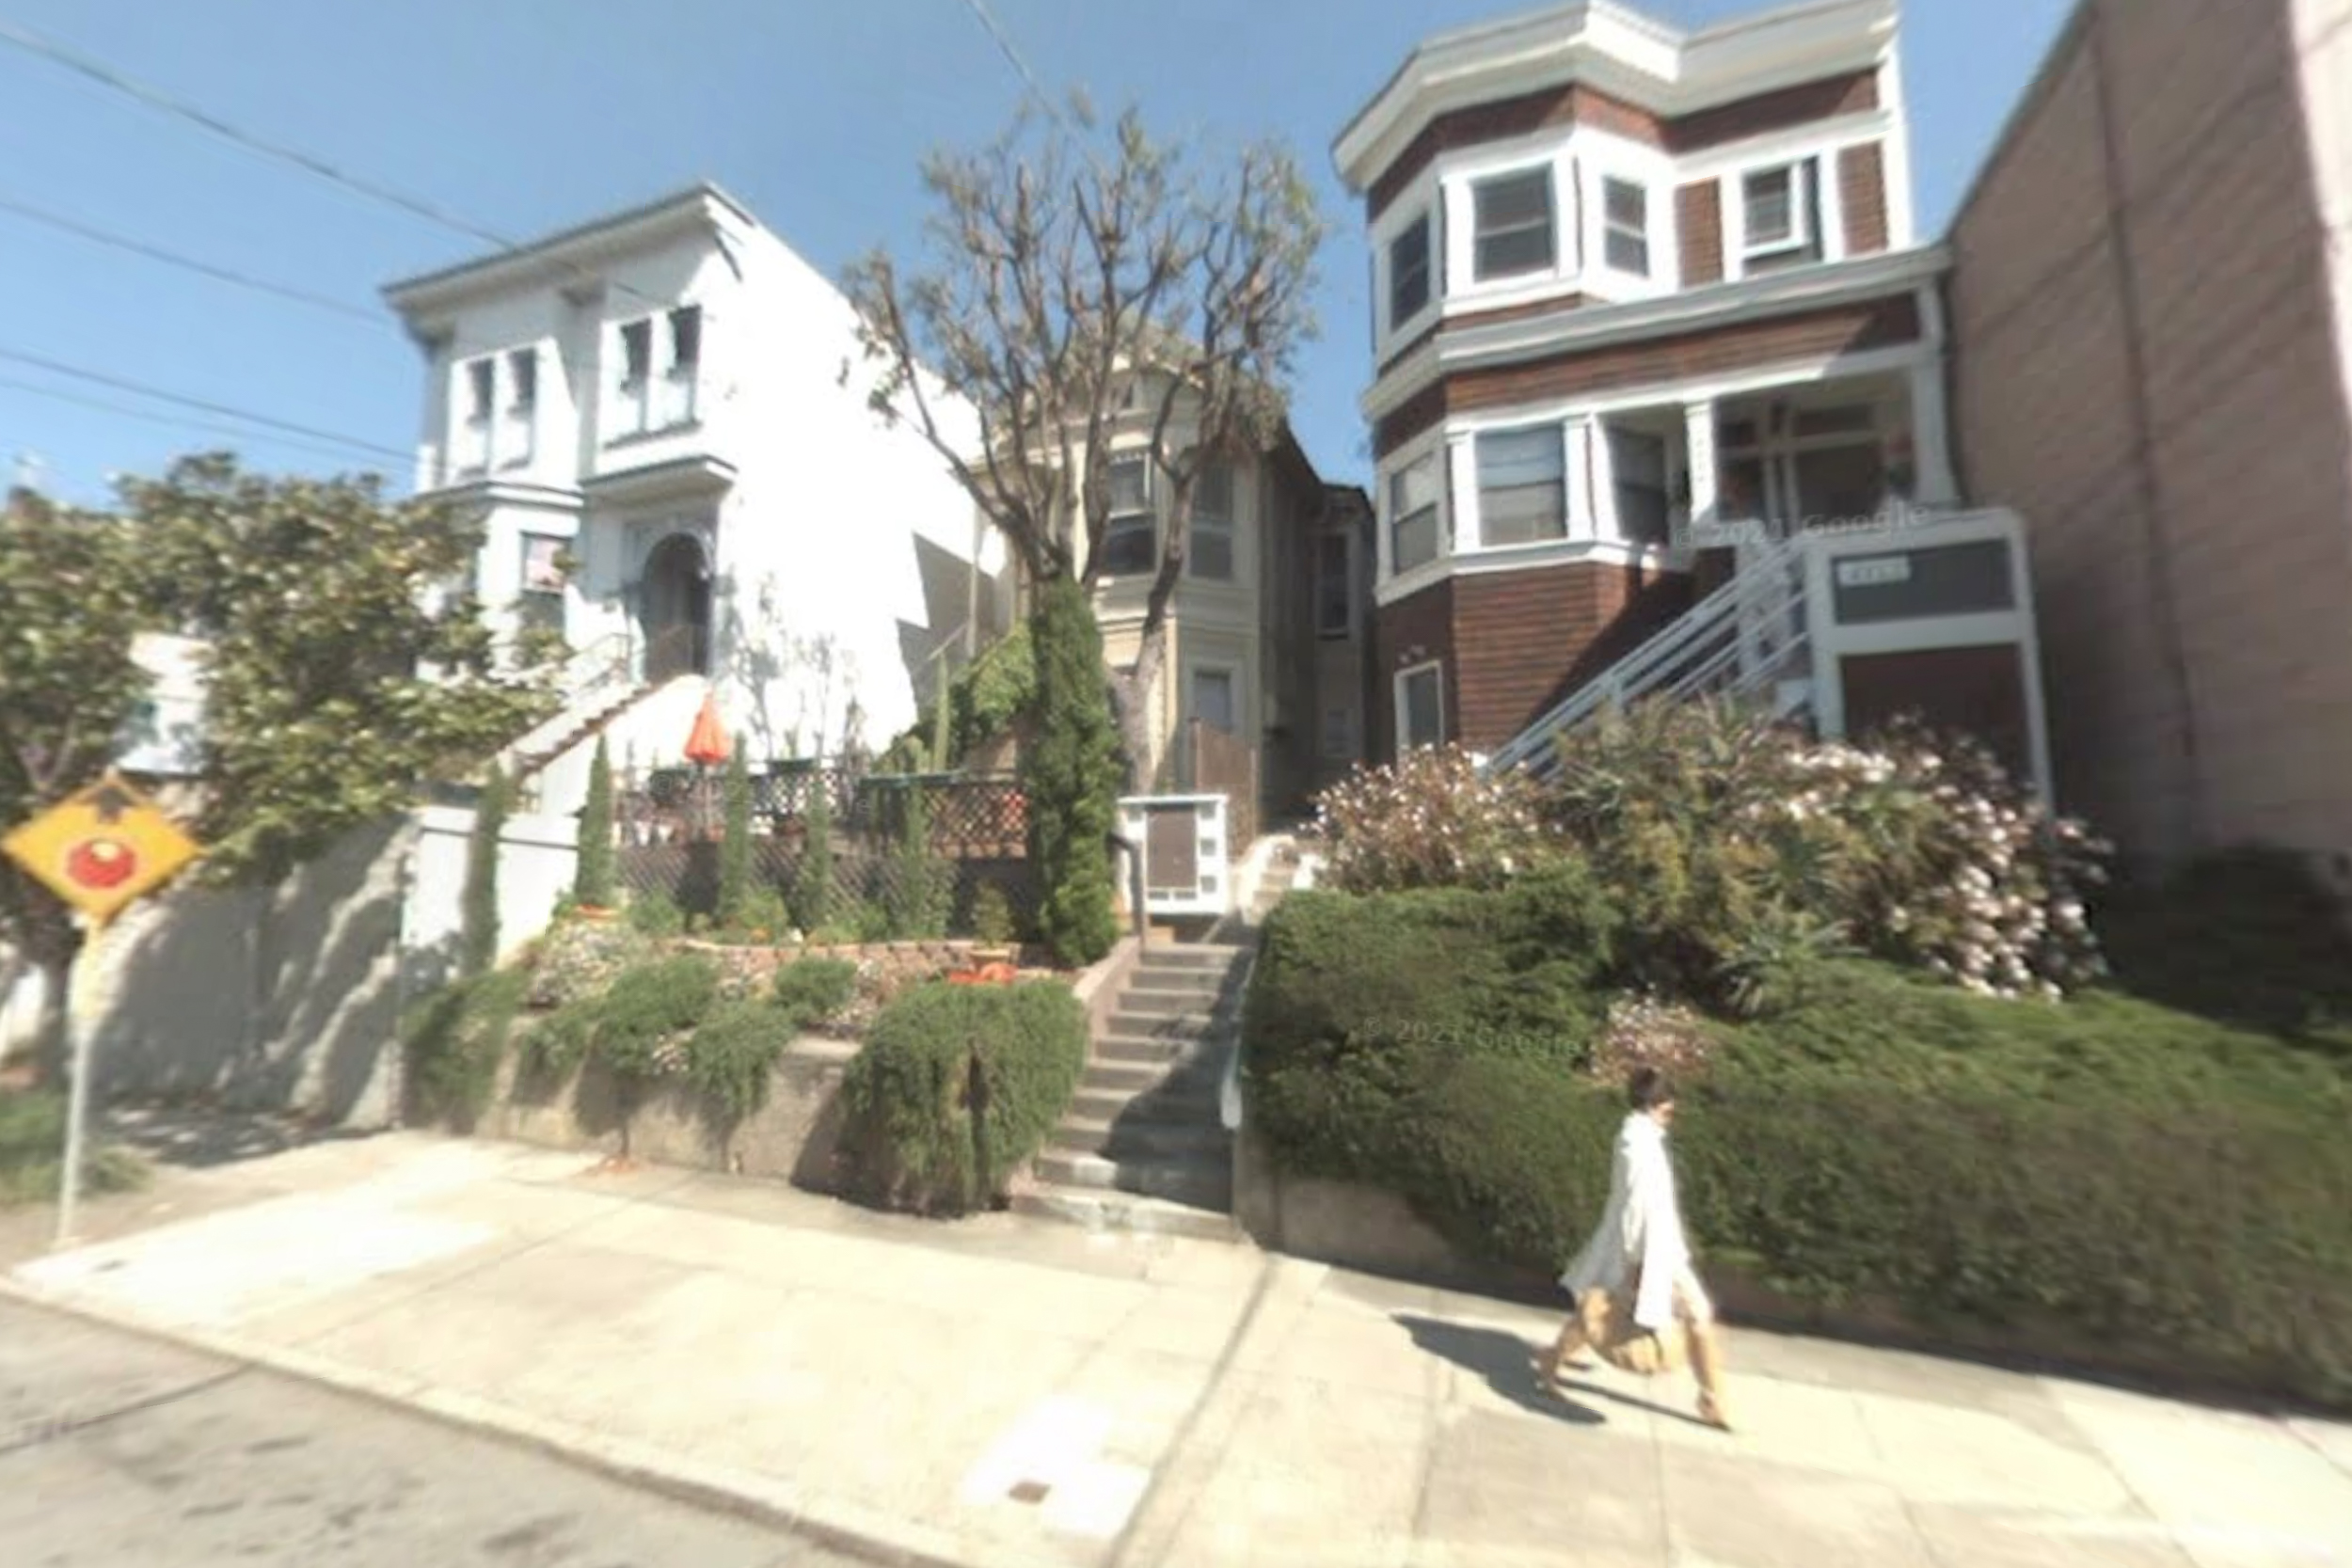 4122 17th Street circa 2008, image via Google Street View